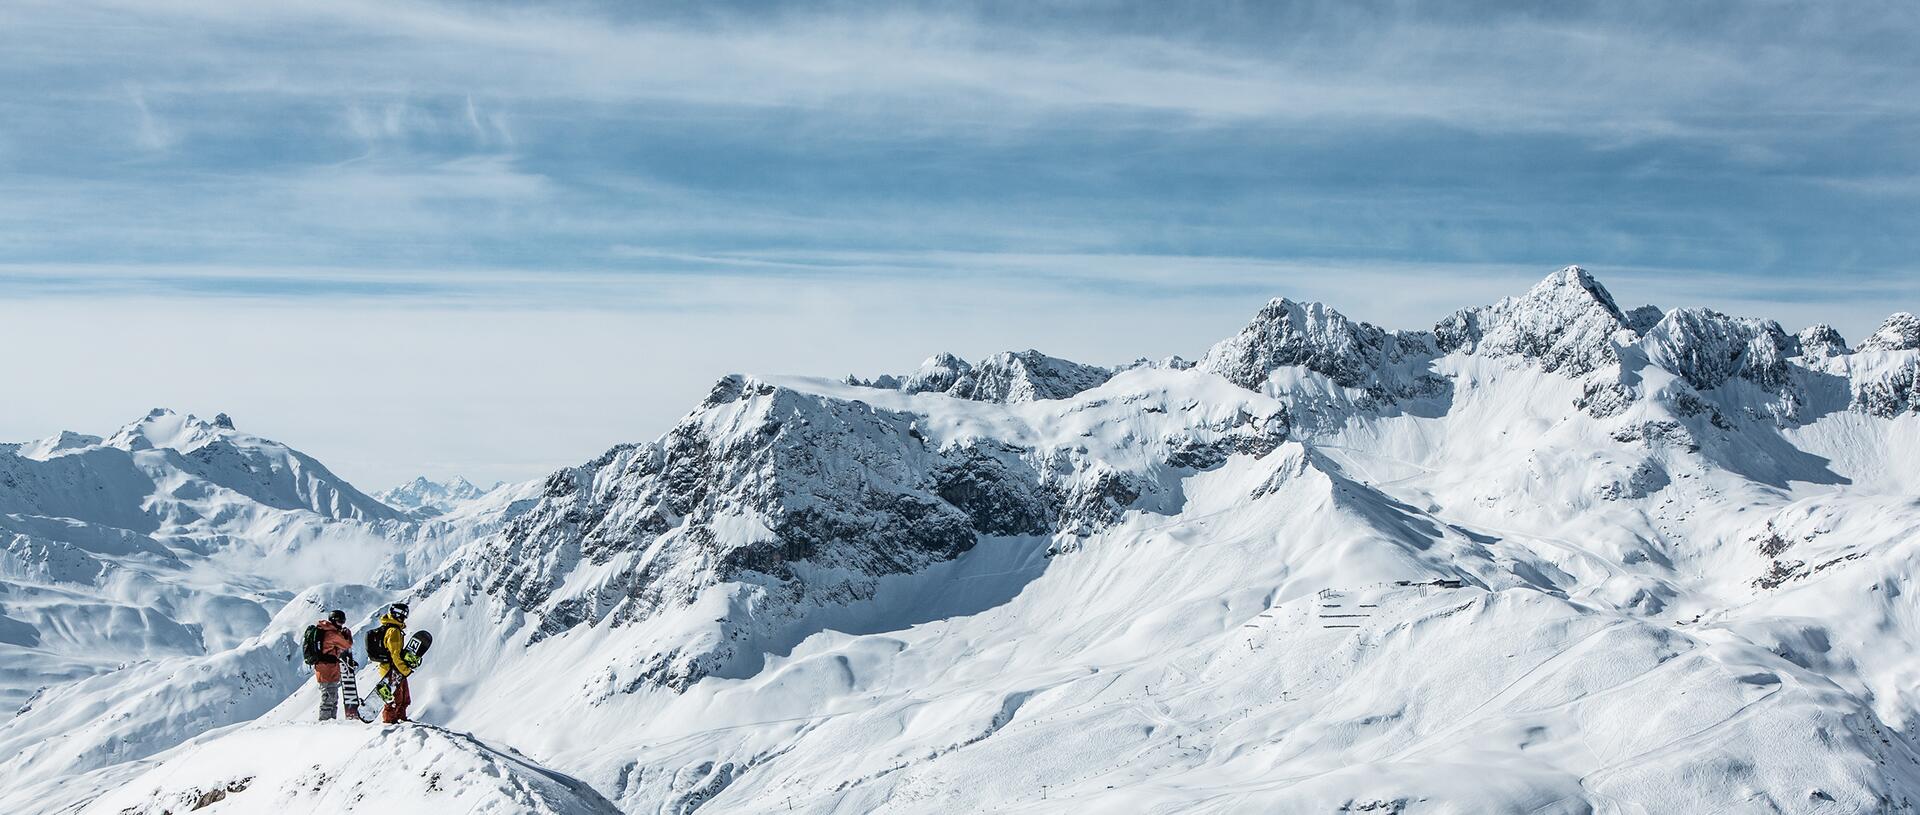 freeriding ski resort Lech am Arlberg